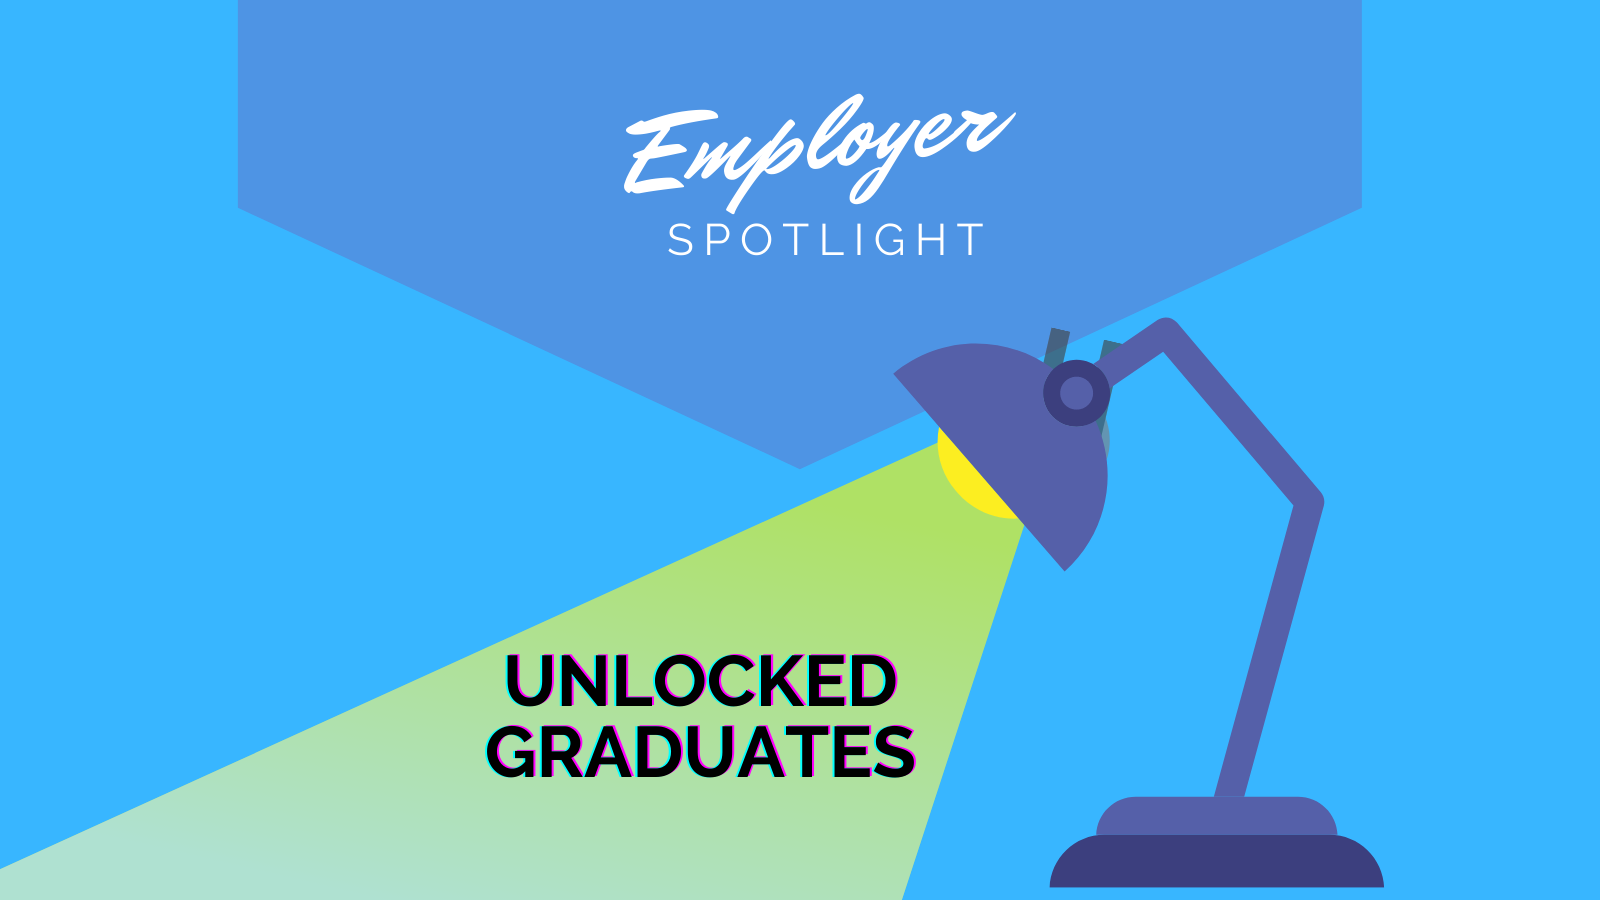 A spotlight on the words 'Unlocked Graduates'